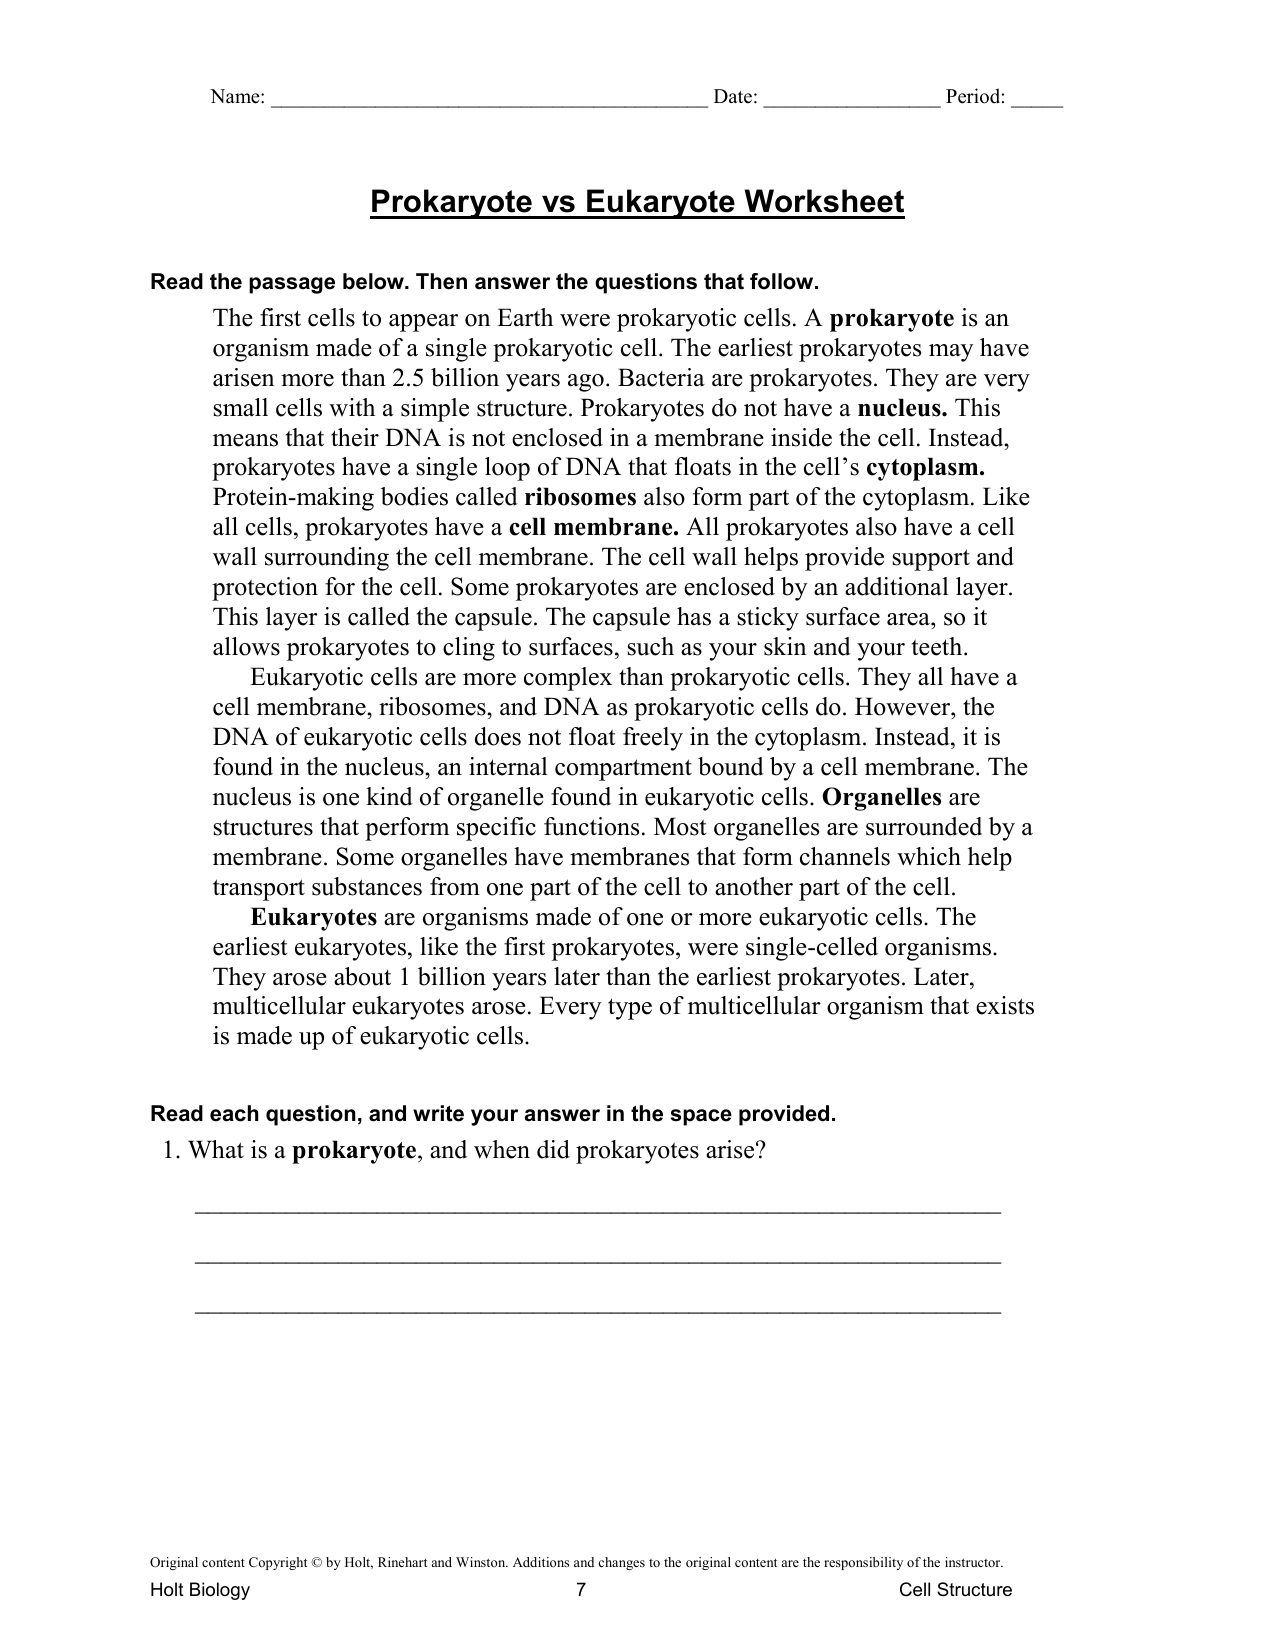 Prokaryote vs. Eukaryote Worksheet Regarding Prokaryotes Vs Eukaryotes Worksheet